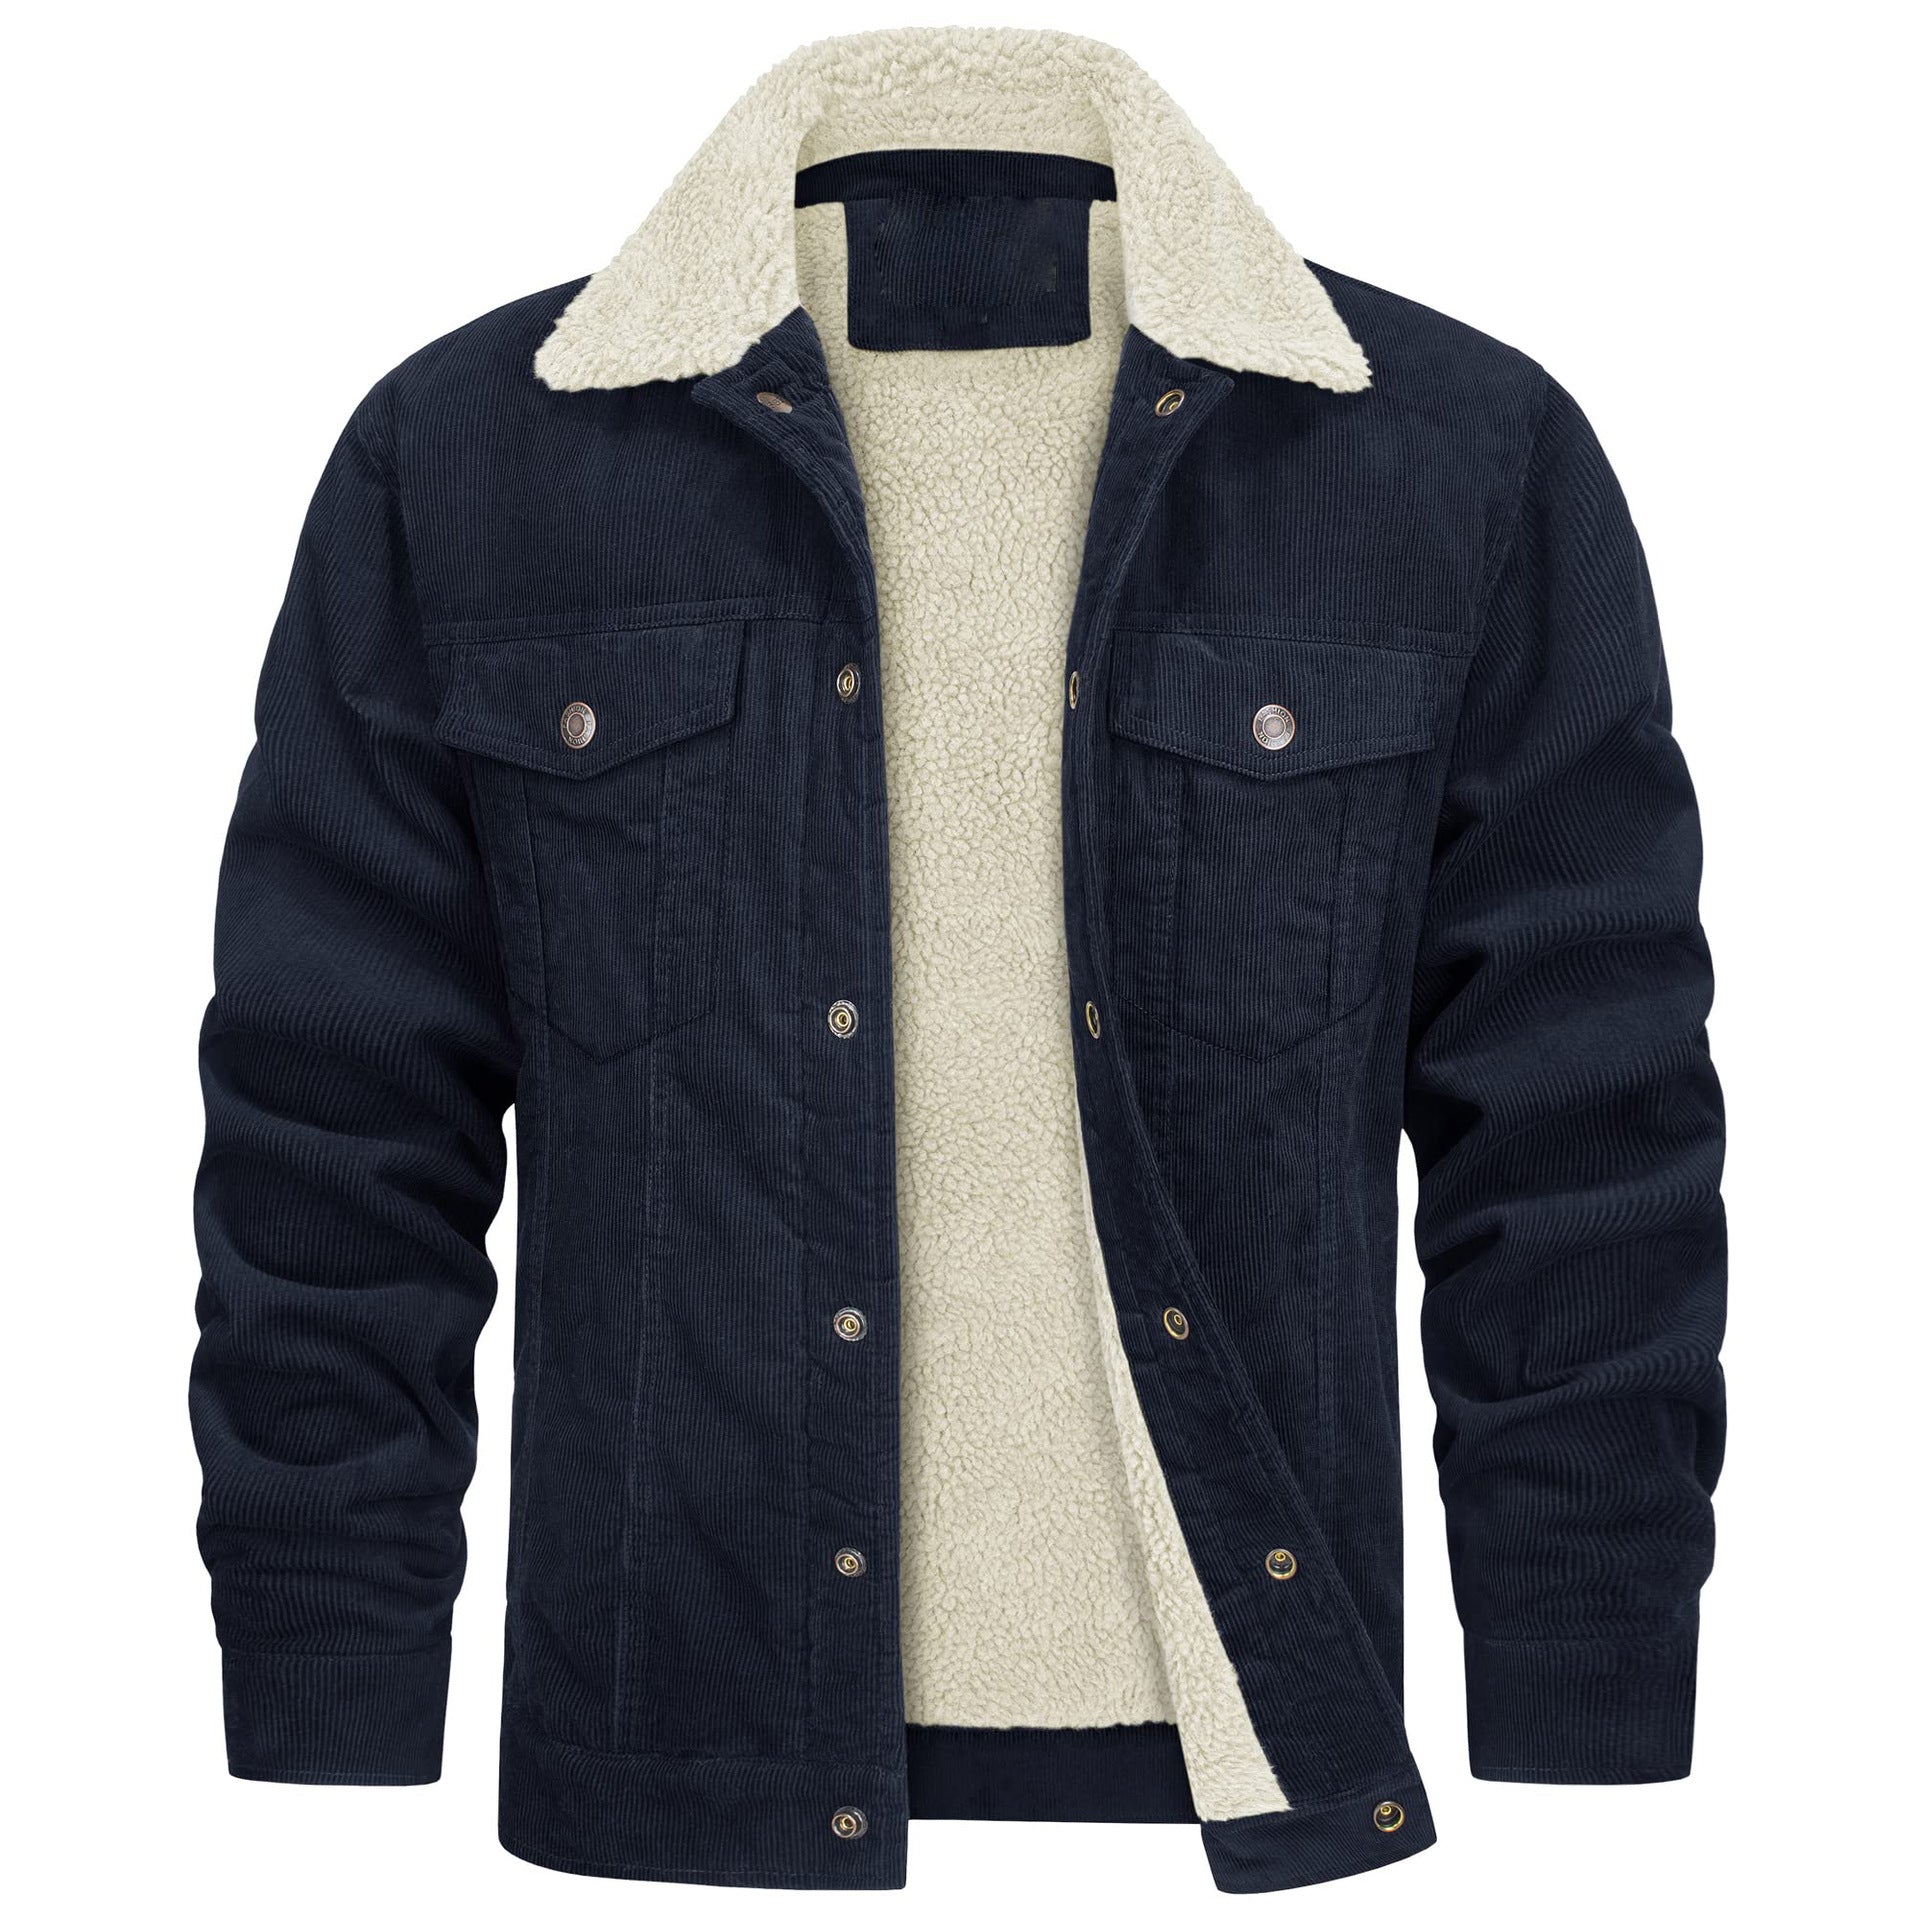 Men's Warm Fleece-Lined Corduroy Casual Jacket